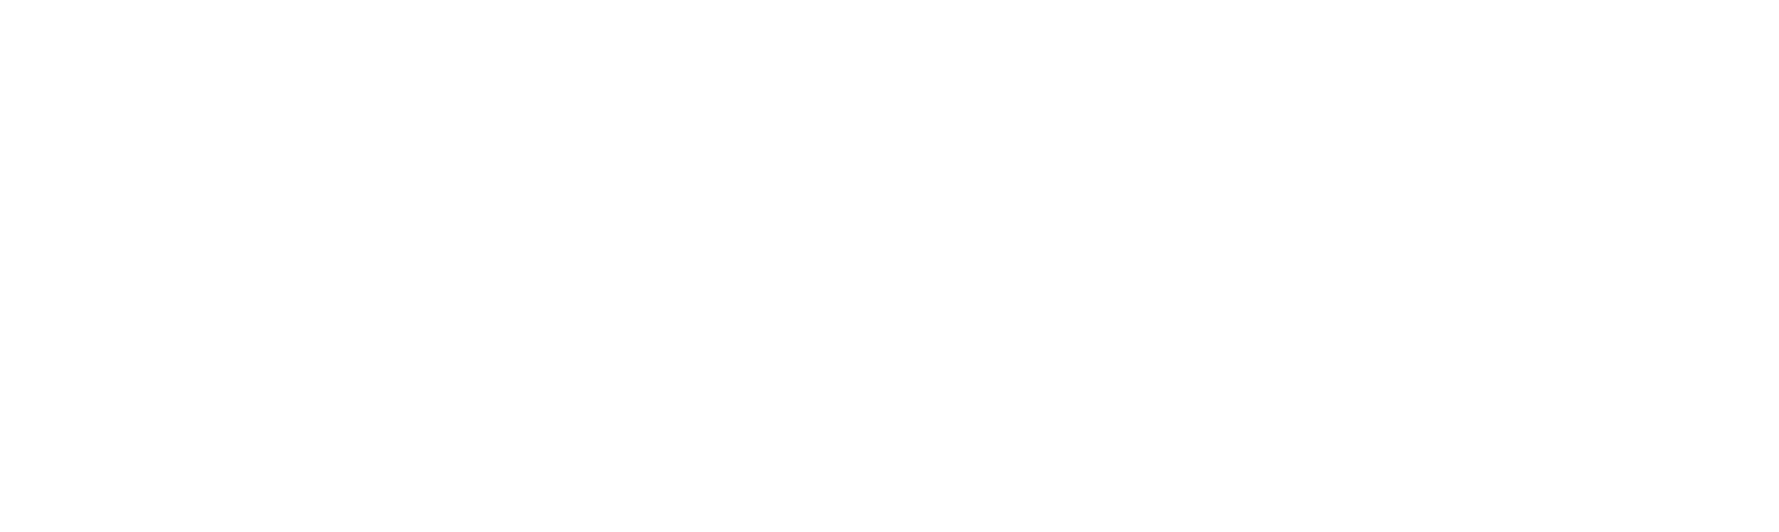 Morley College